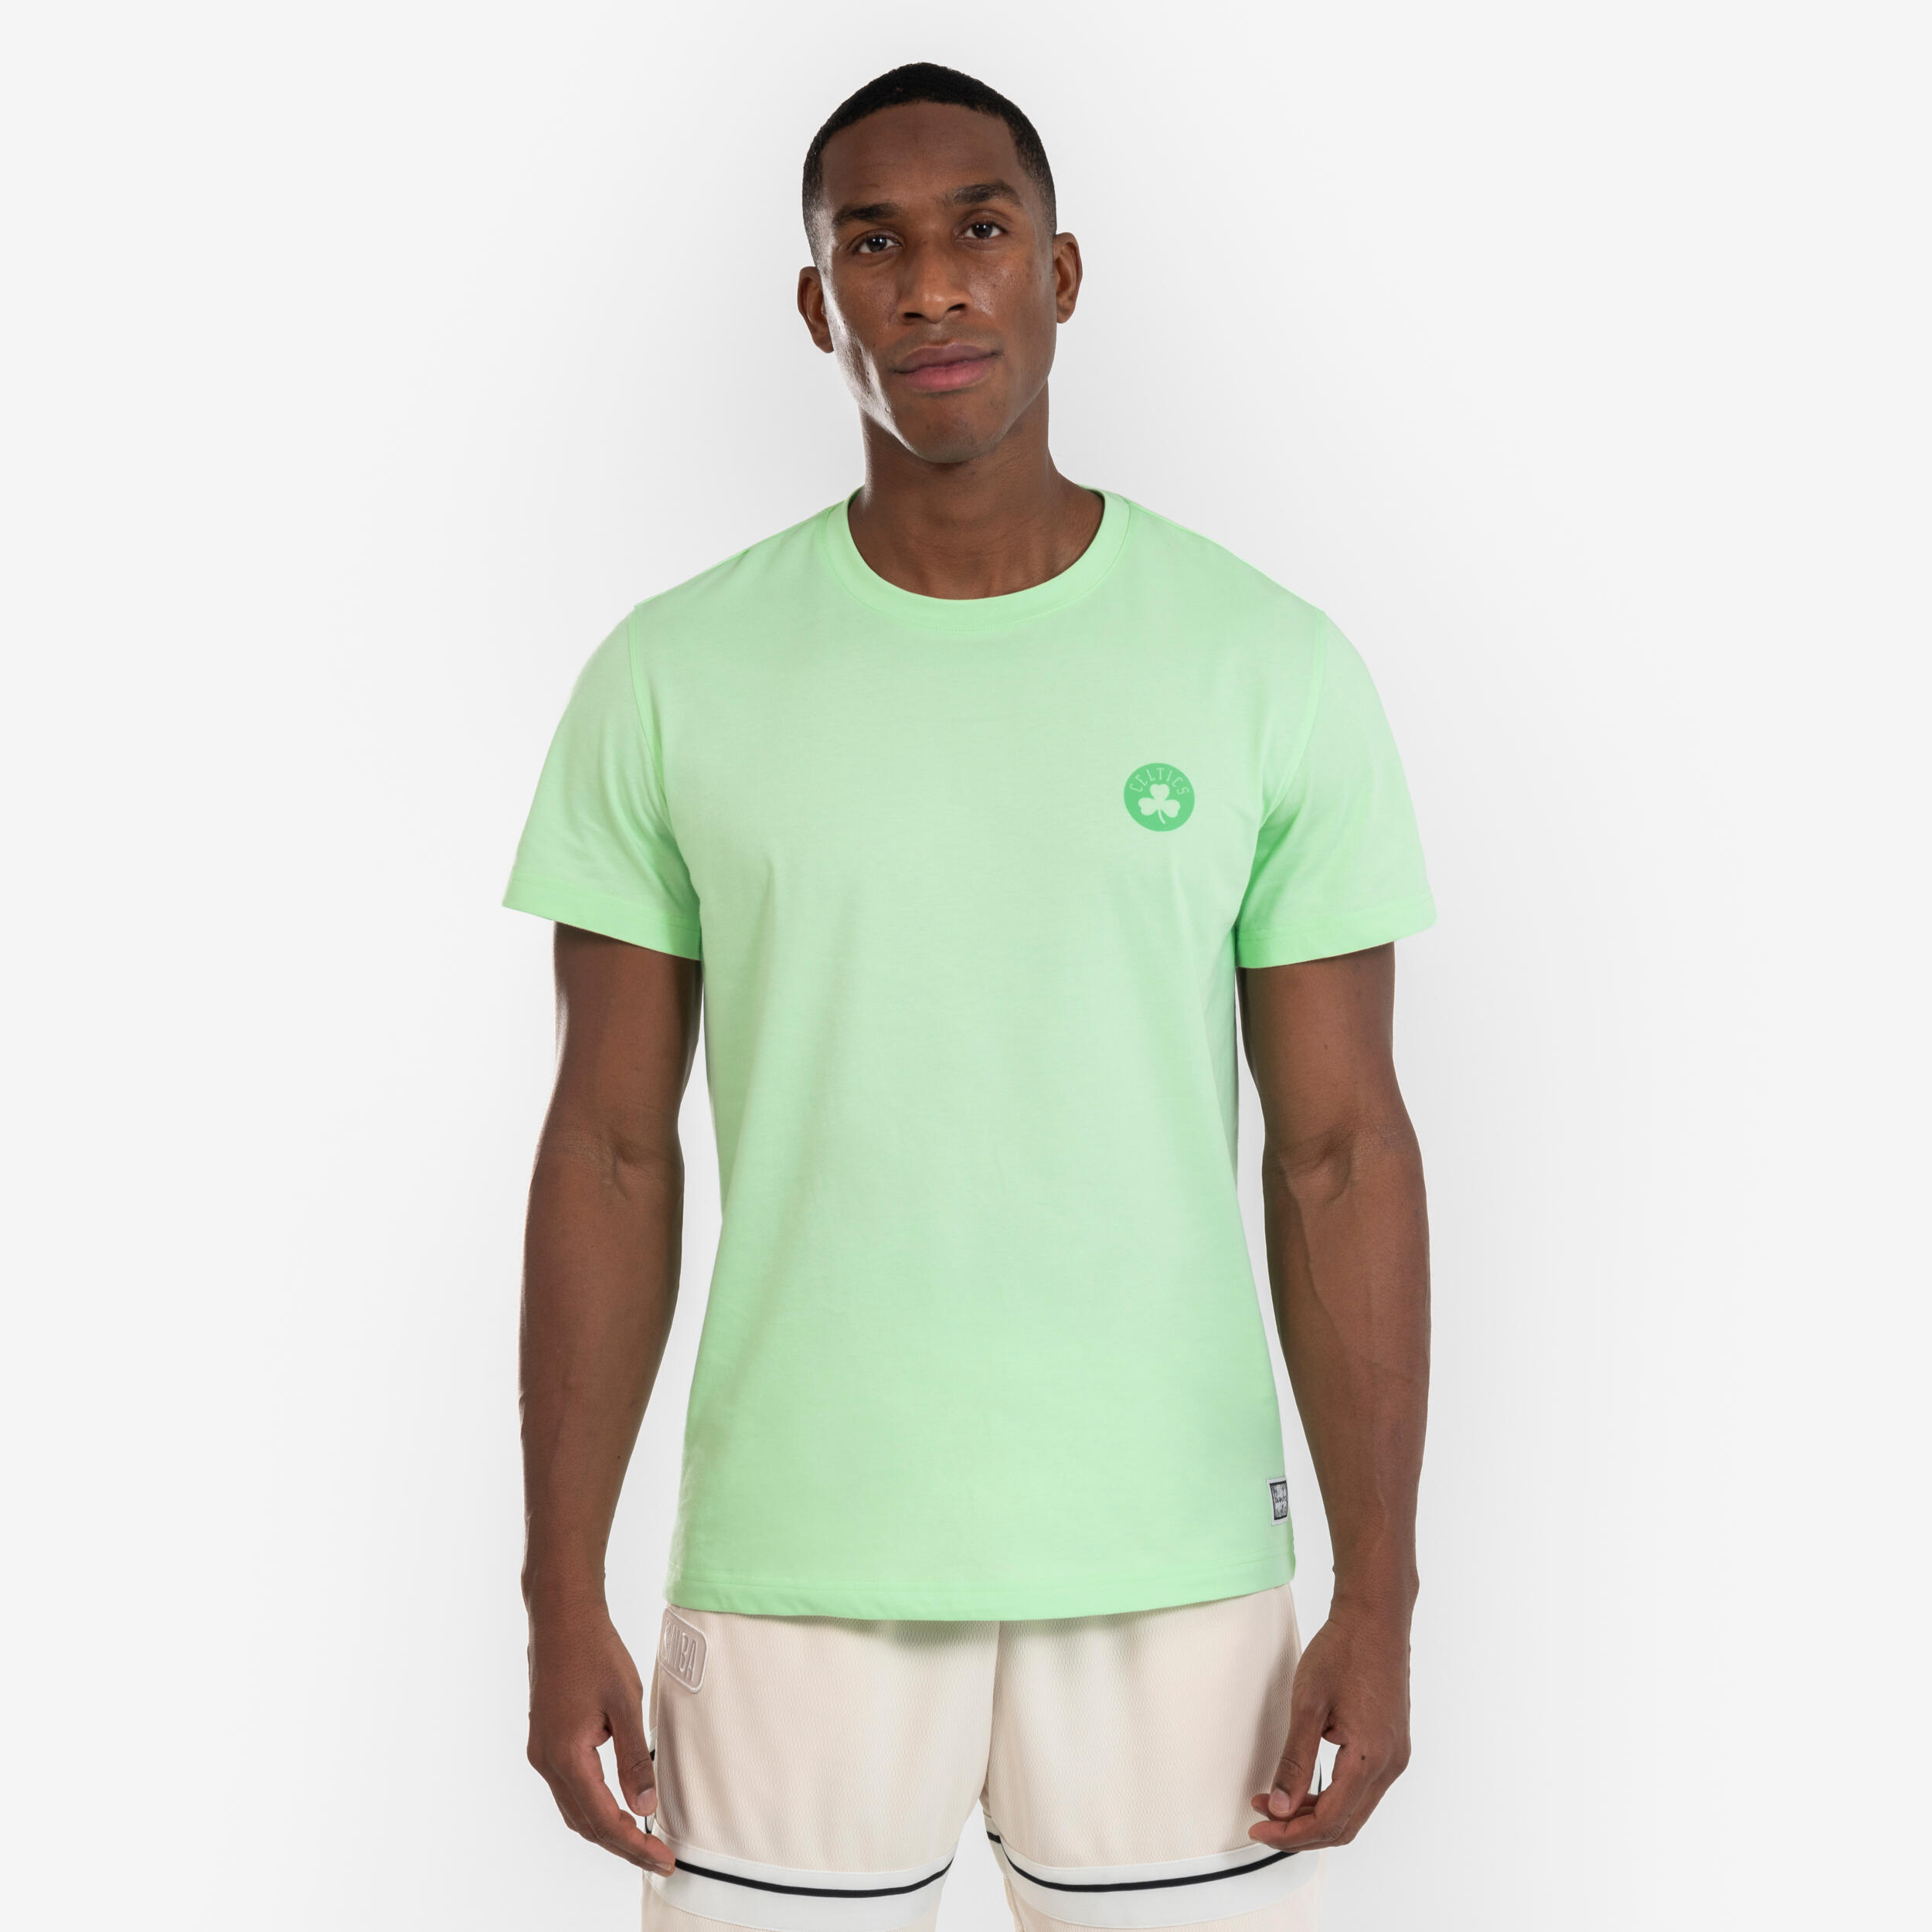 Unisex Basketball T-Shirt 900 AD - NBA Celtics/Green 3/8